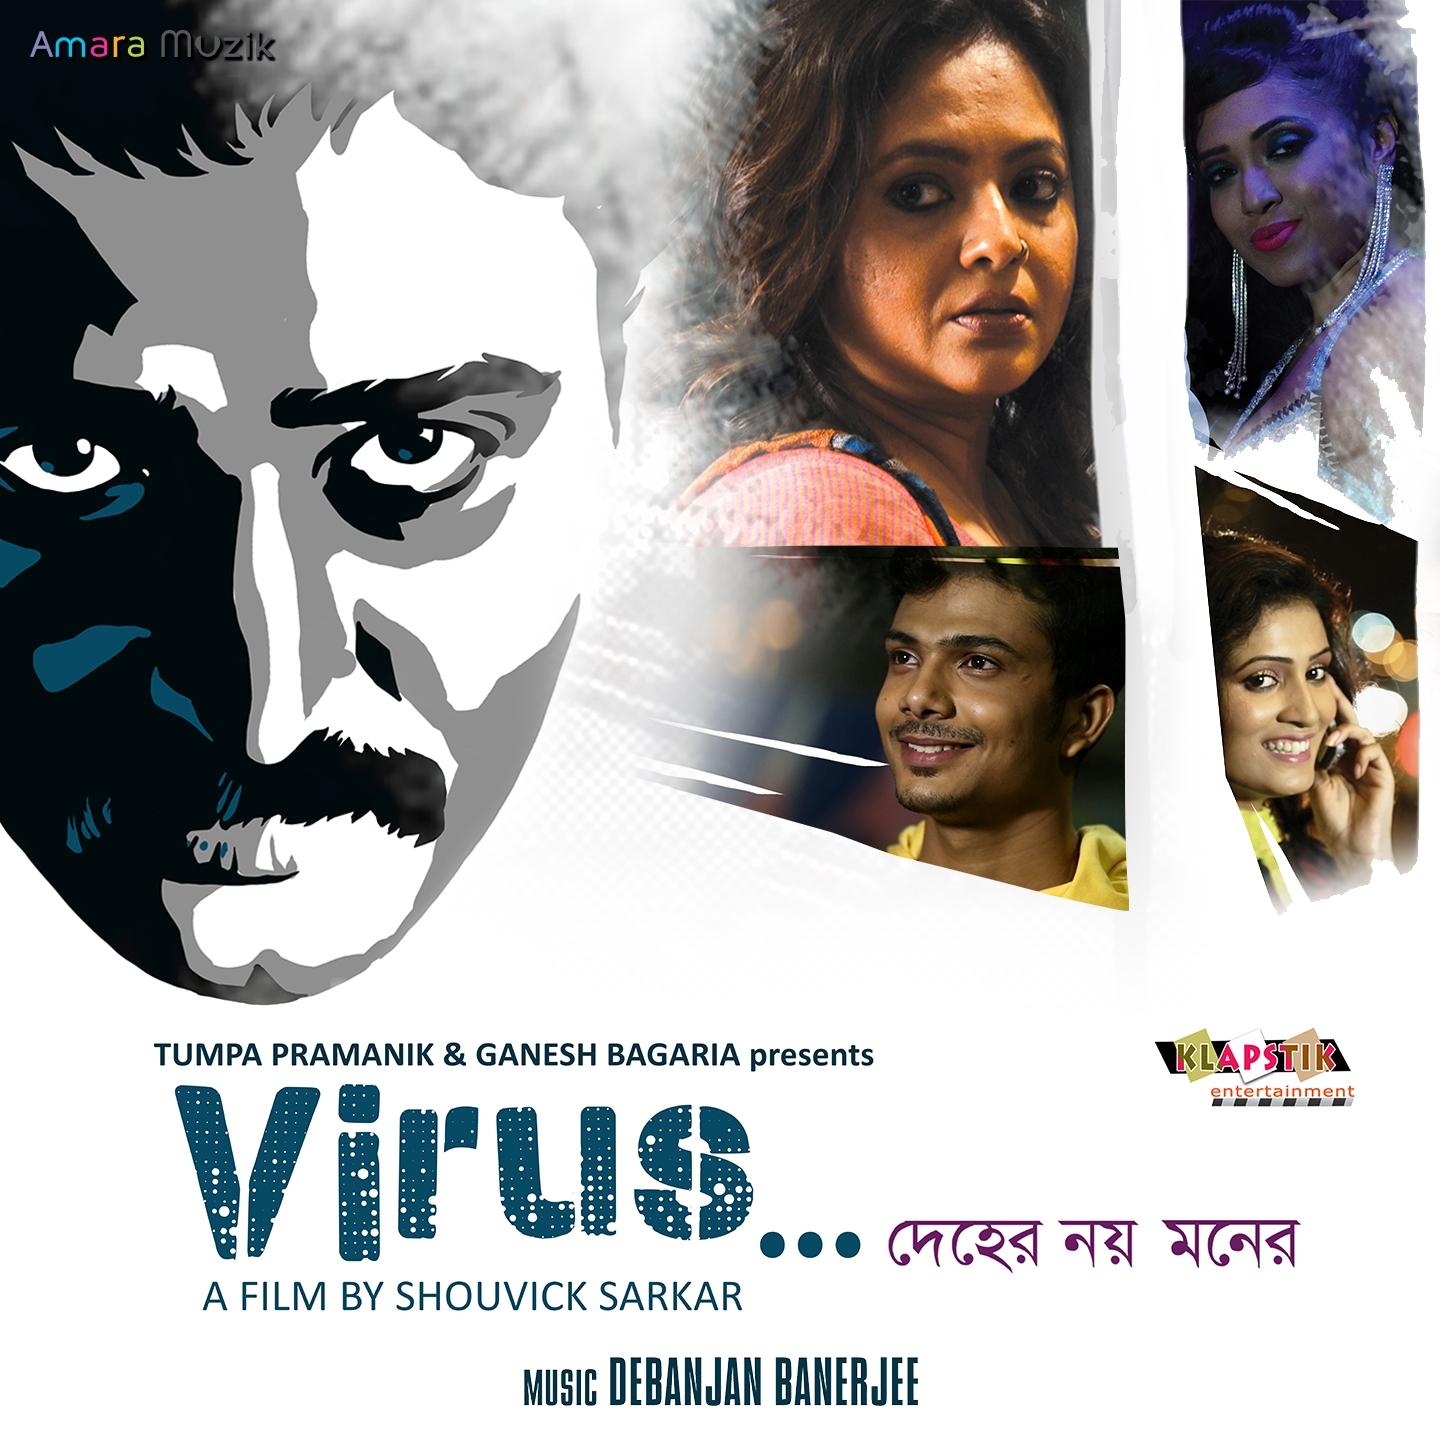 Virus (Original Motion Picture Soundtrack)